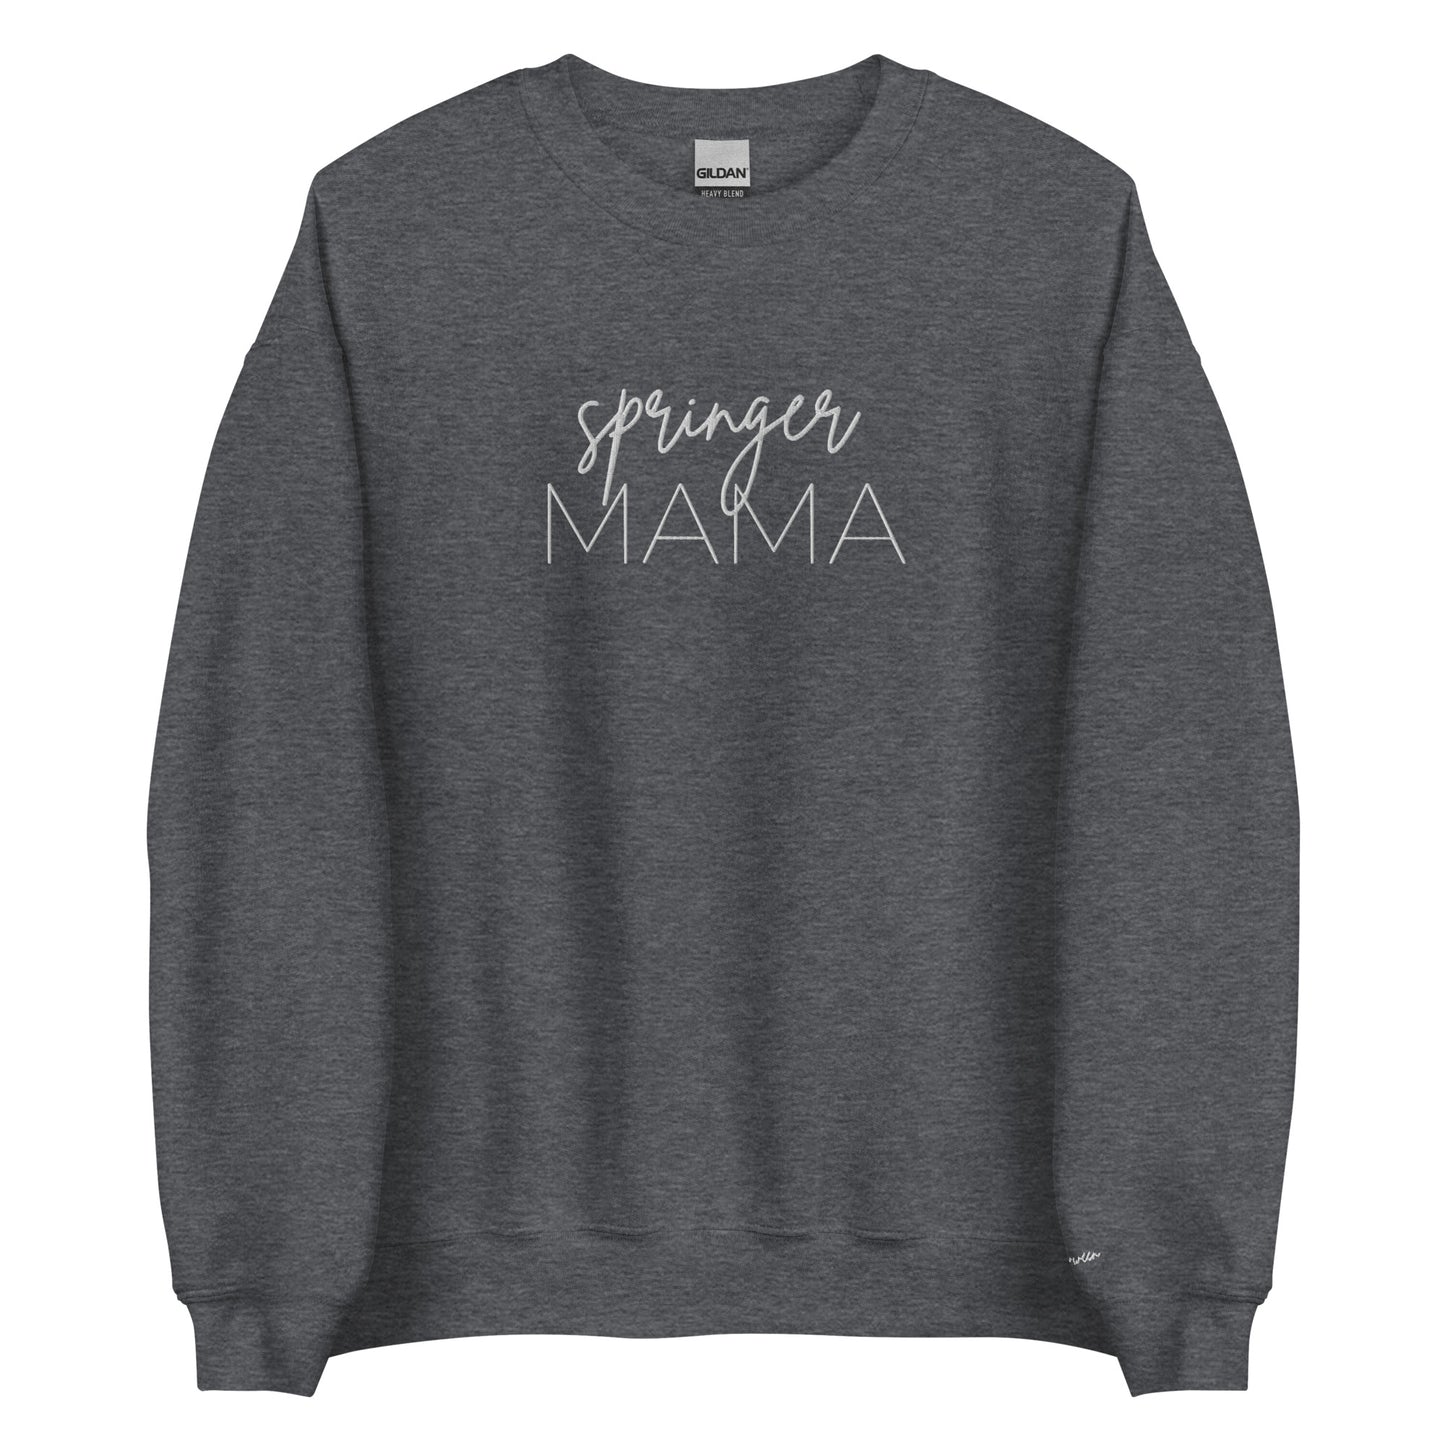 Embroidered Sweatshirt - SPRINGER MAMA